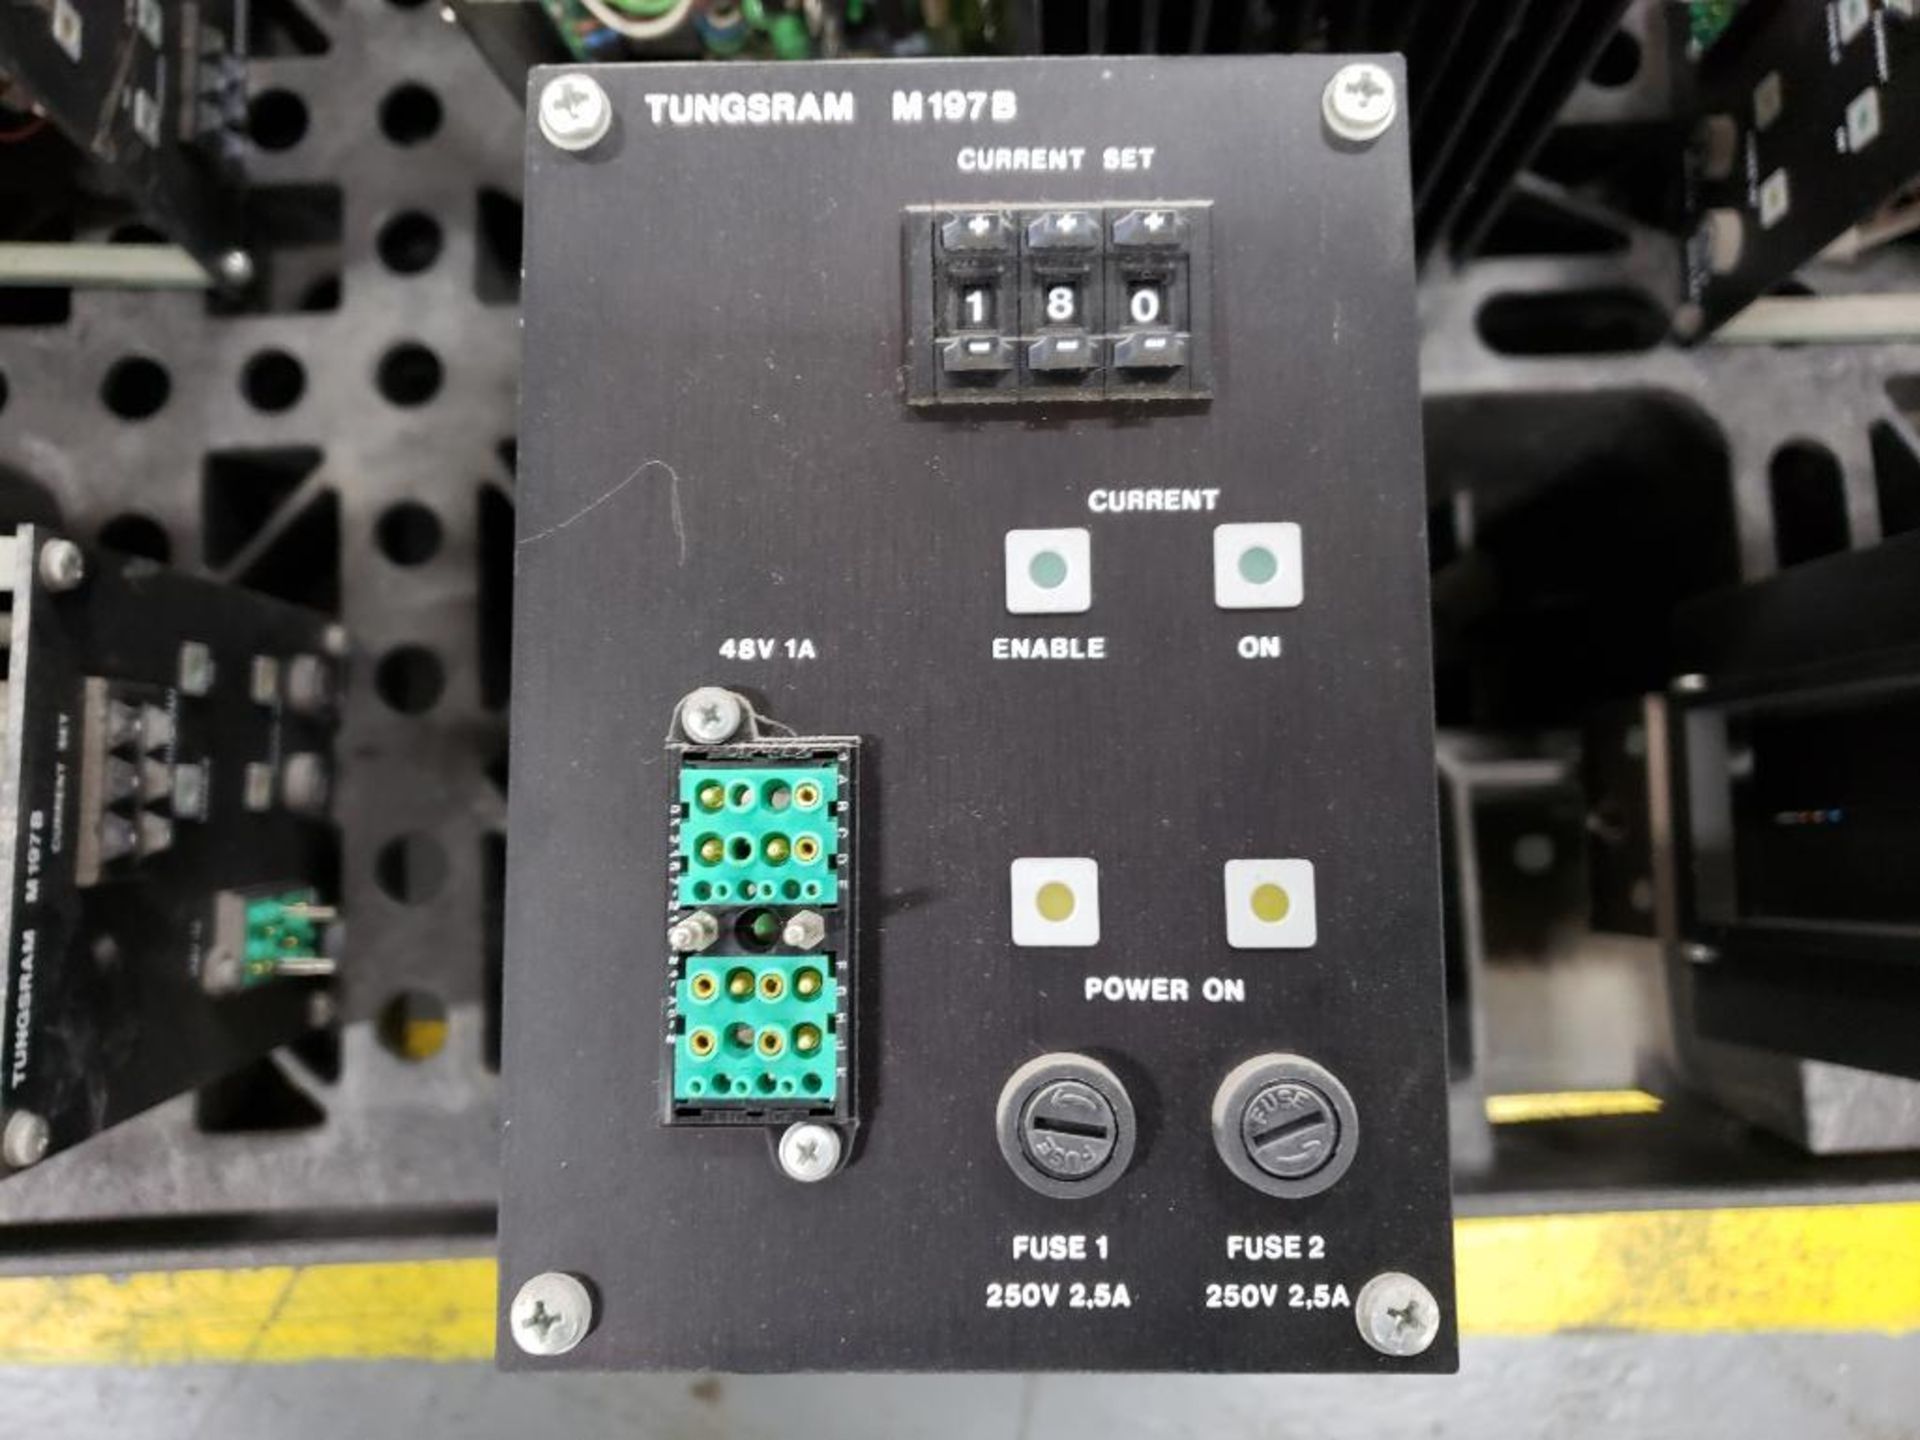 Qty 20 - Tungsram model M197B power supply. - Image 3 of 5